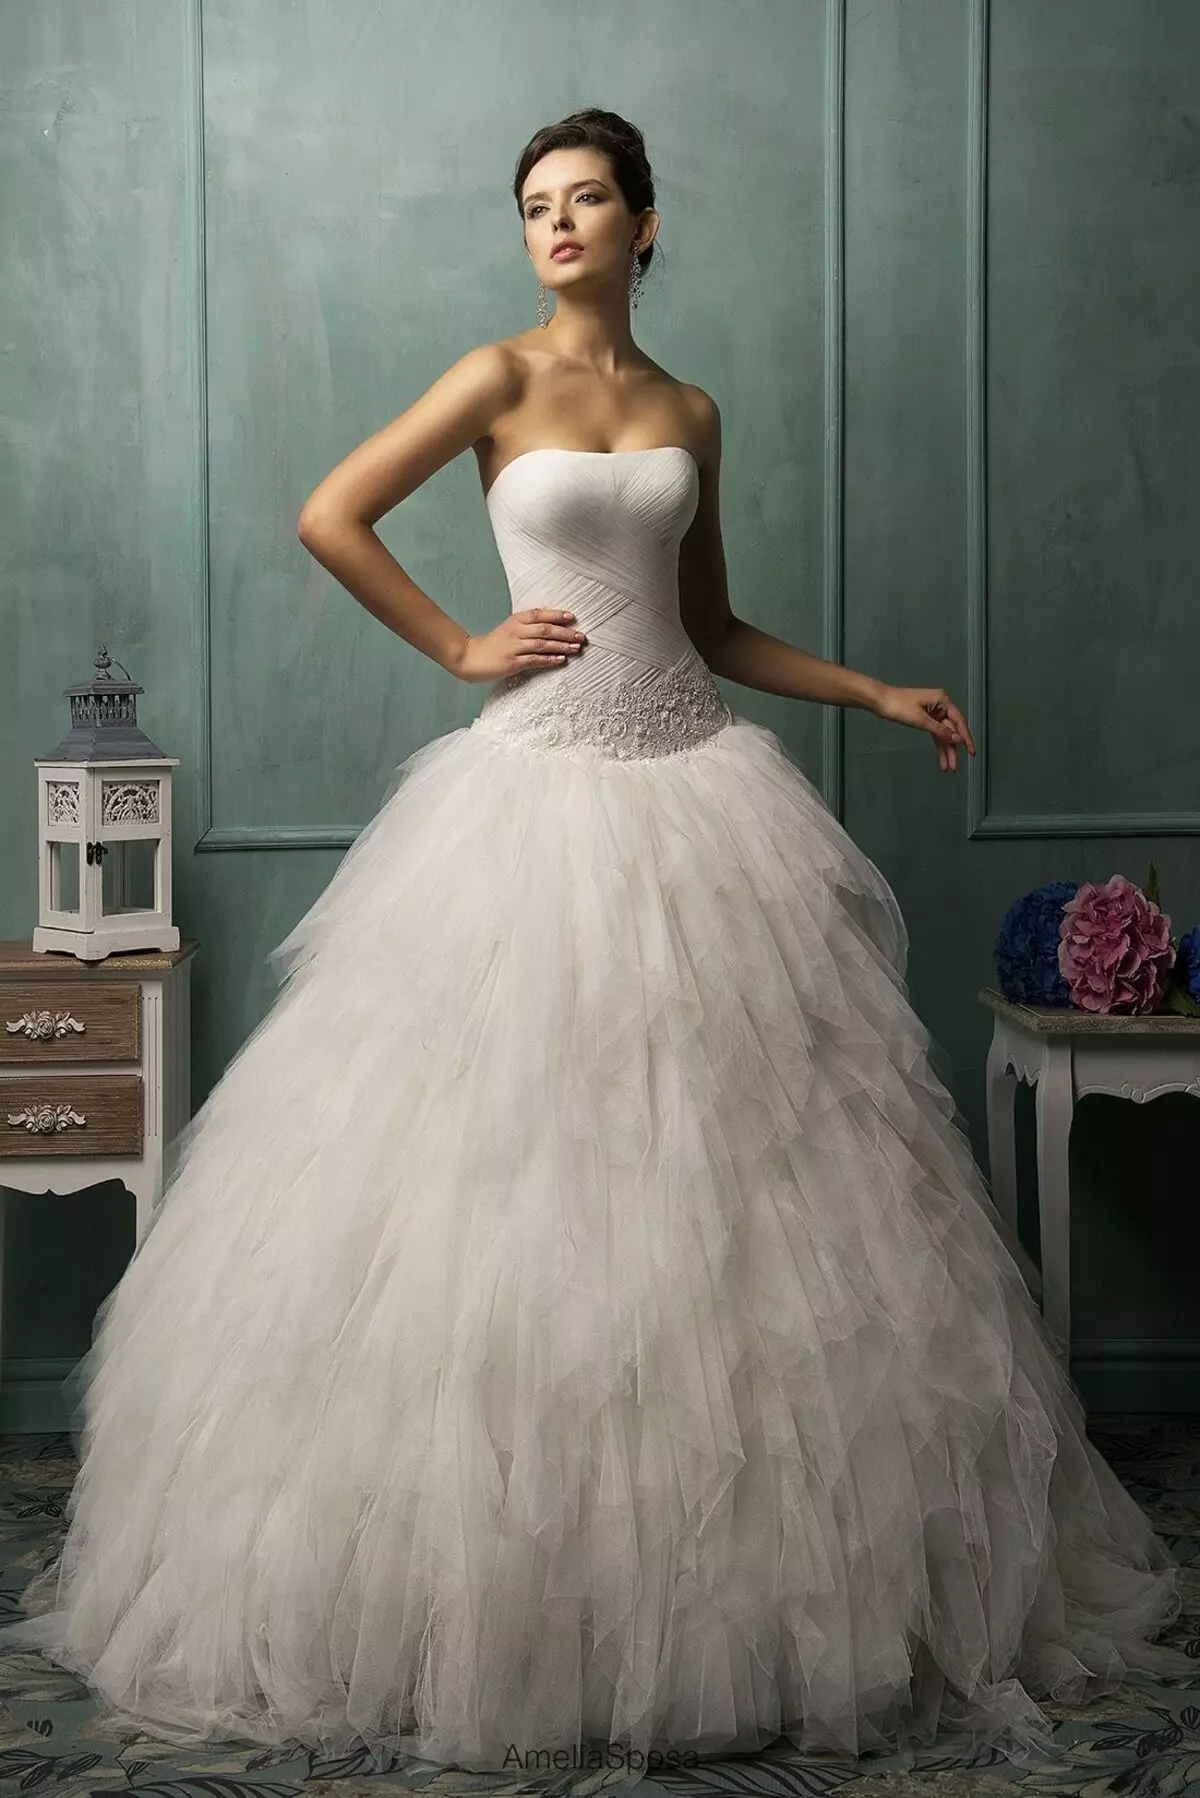 Multi-Layer စကတ်နှင့်အတူ Amelia Sposa မှမင်္ဂလာဆောင်ဝတ်စုံ